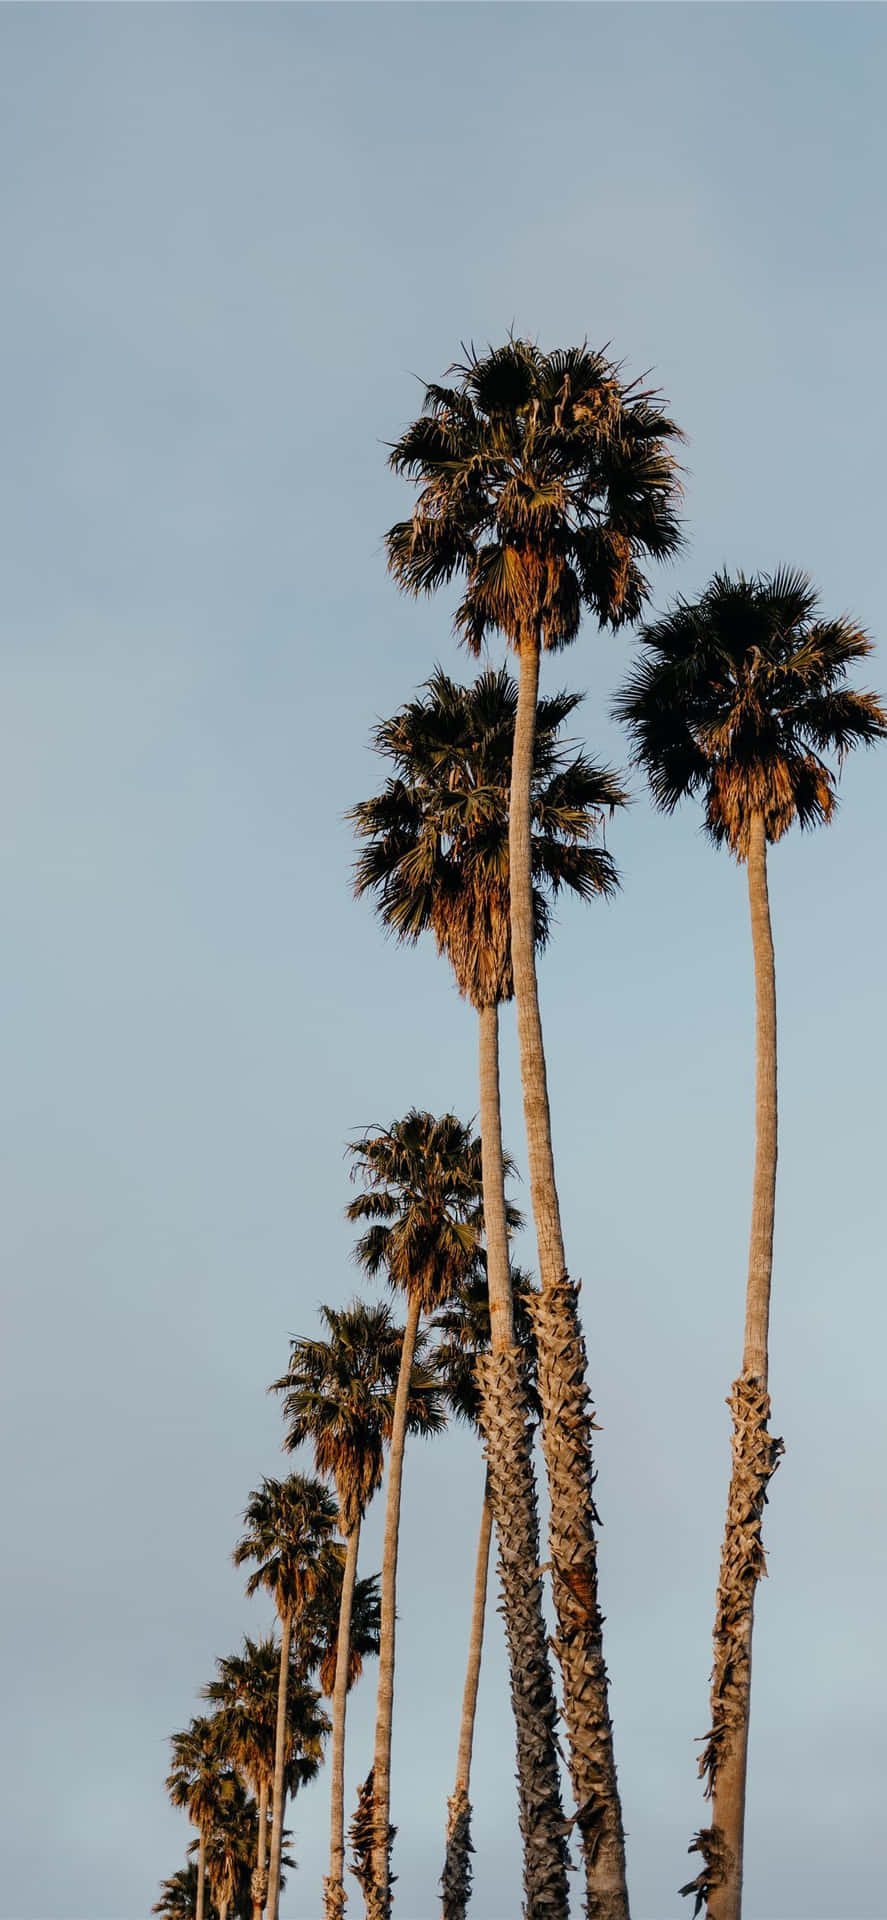 Capture a West Coast Golden Sunset with an Iphone X